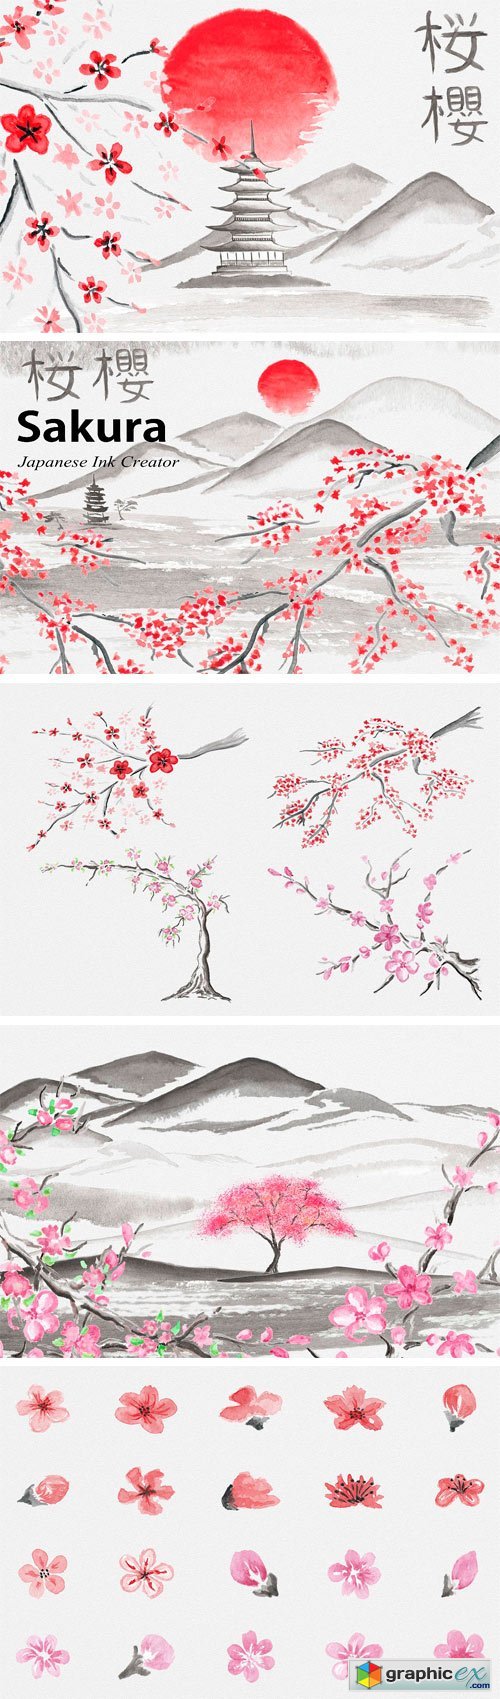 Sakura. Japanese Ink Creator